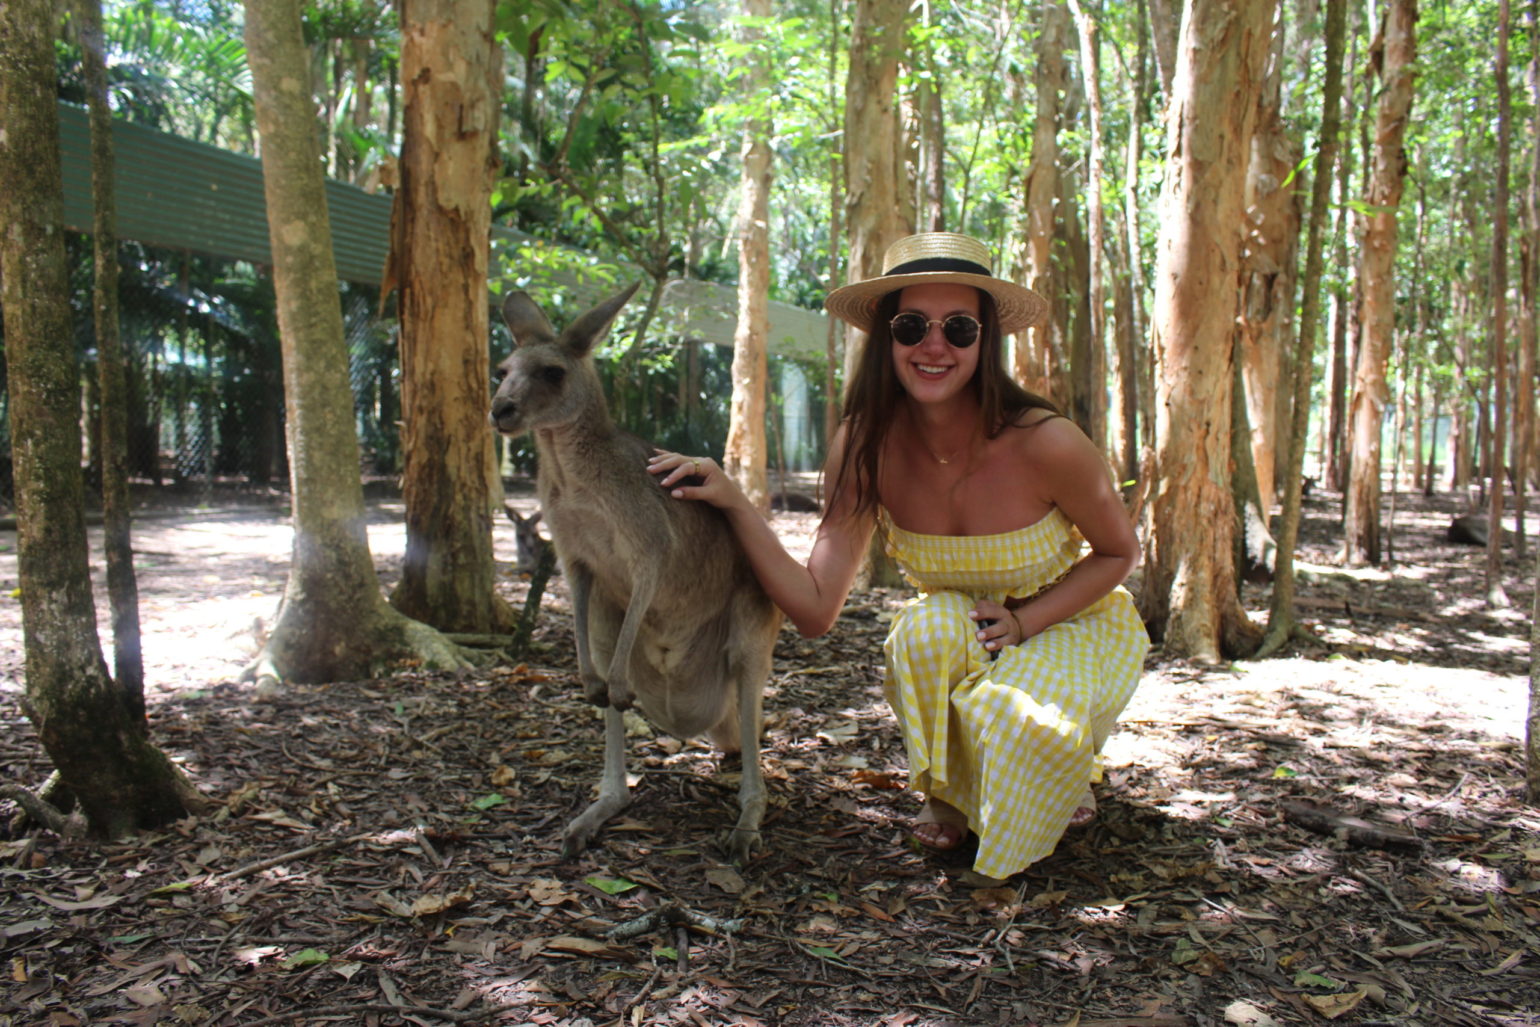 Australia Zoo with kangaroos, brisbane